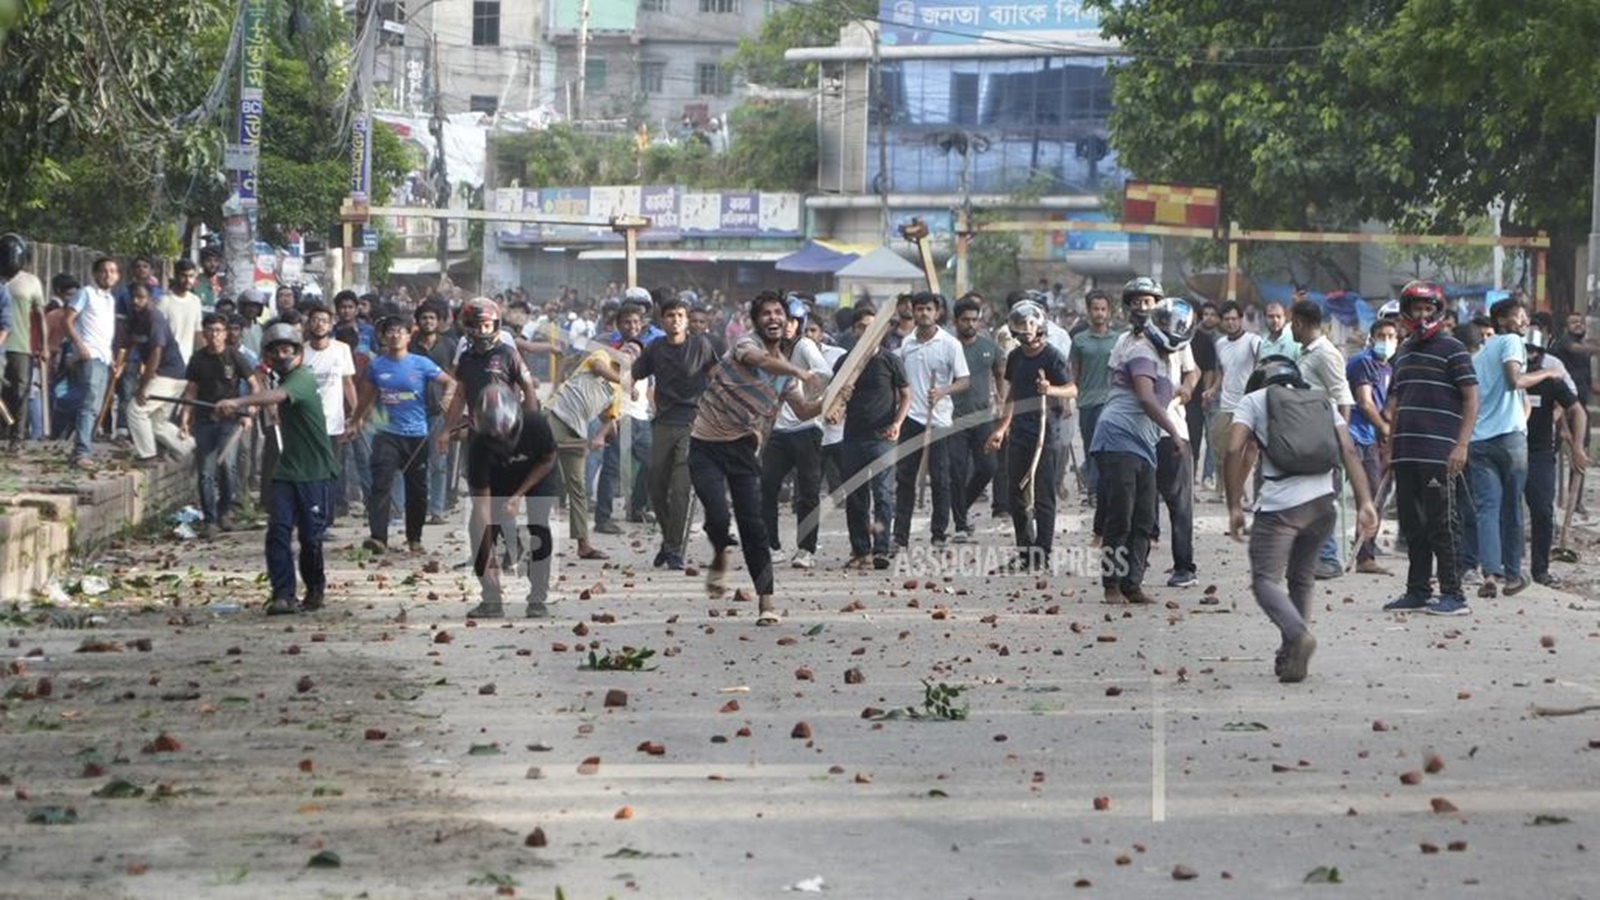 violenceeruptsinbangladeshaspoliceclashwithdhakauniversitystudentsduringquotareformprotest